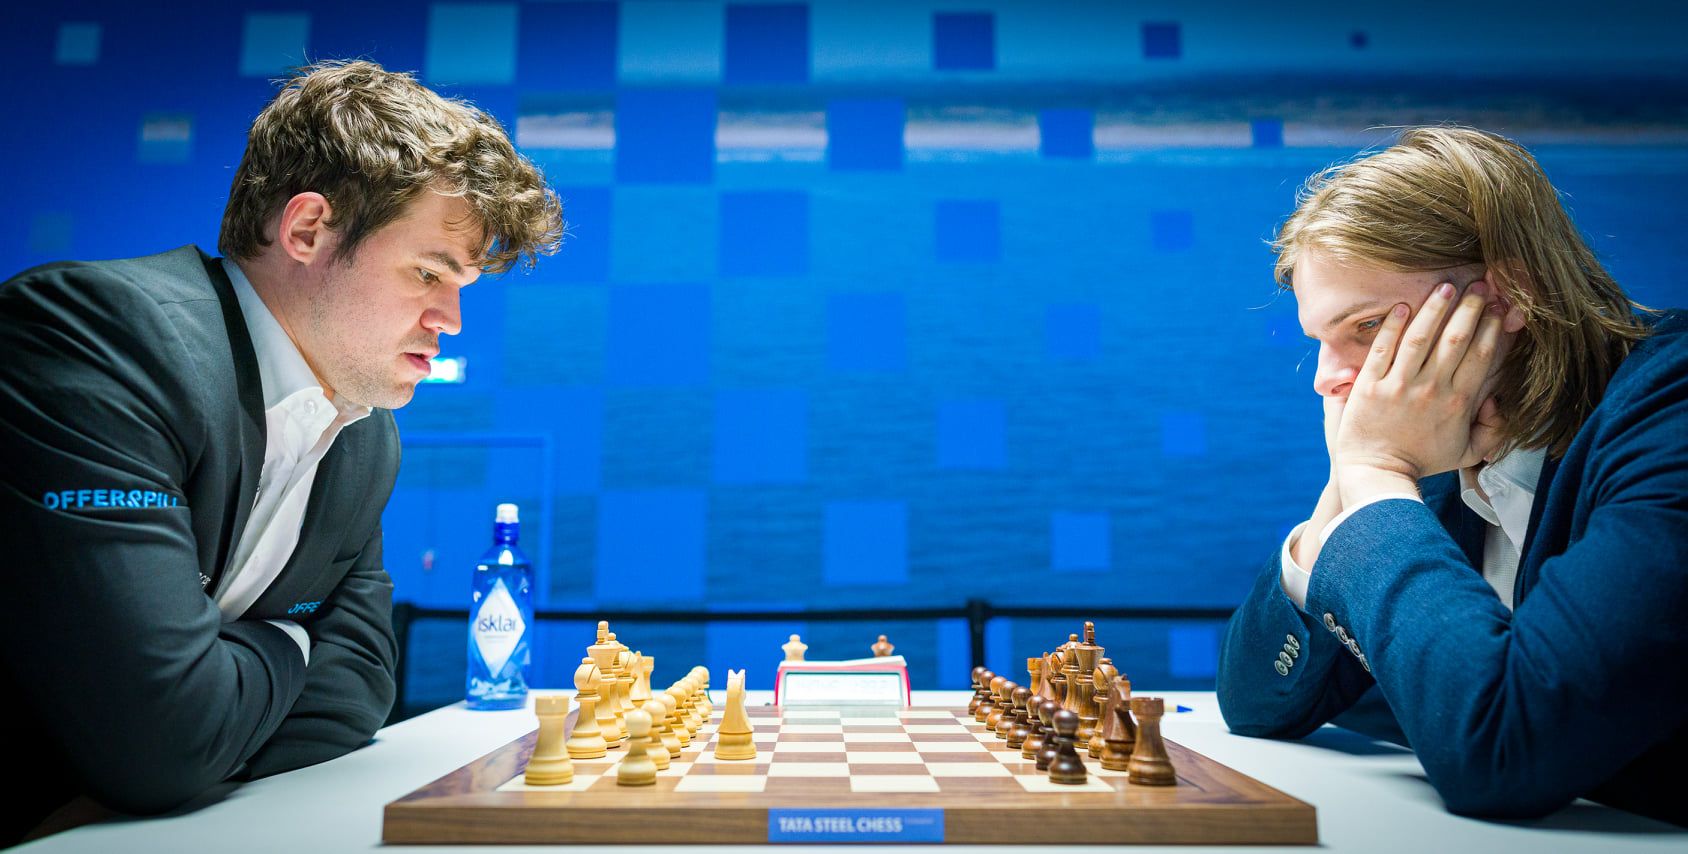 Tata Steel Chess, ronda 13: Carlsen se corona campeón tras los